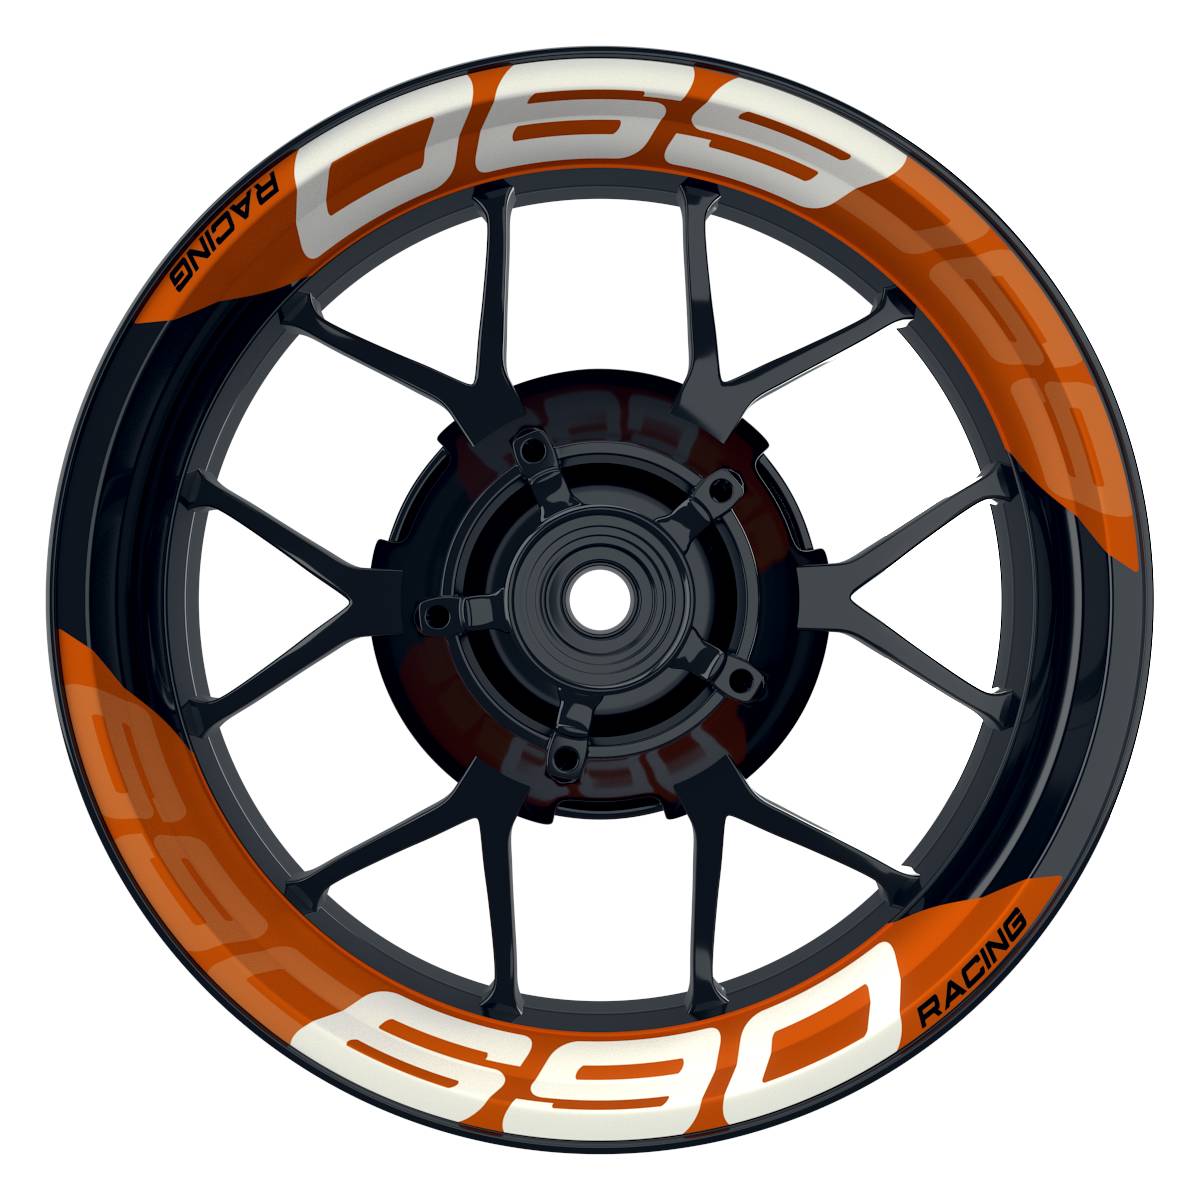 Wheelsticker Felgenaufkleber KTM Racing 690 einfarbig V2 orange Frontansicht